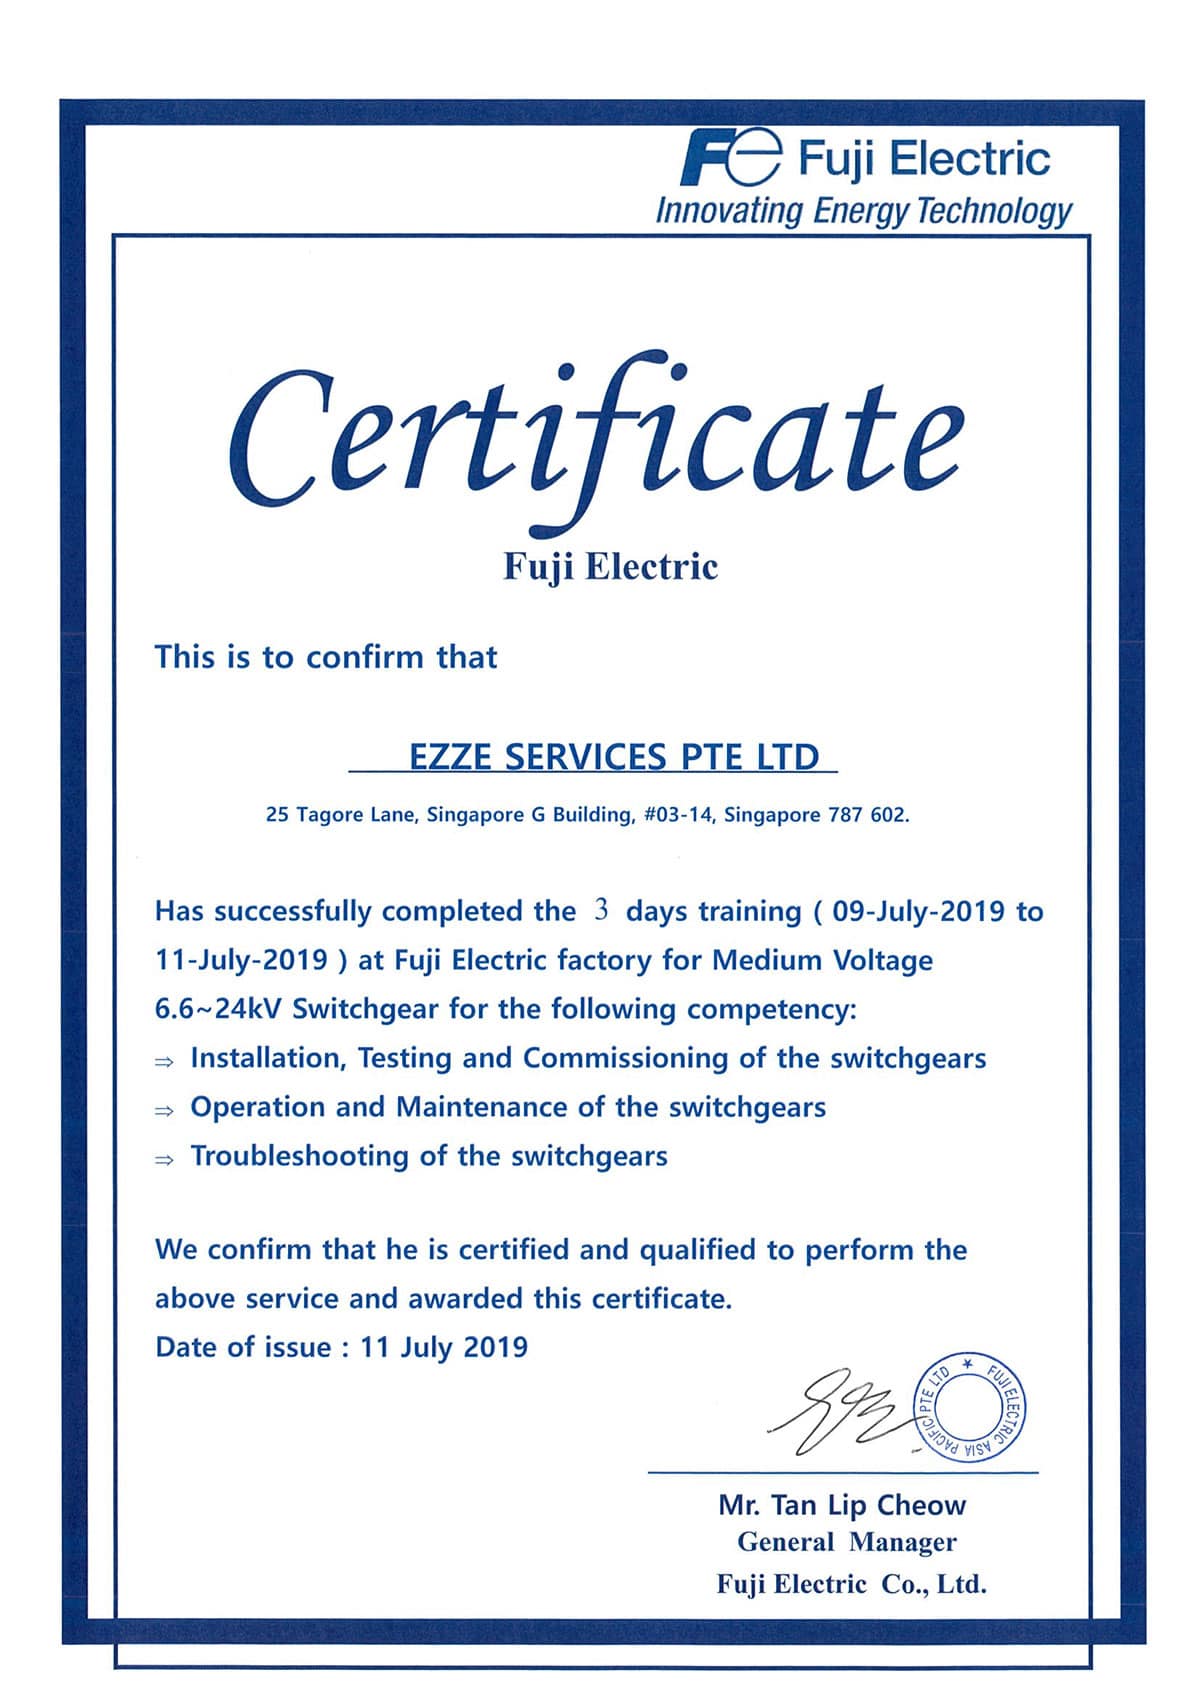 Fuji Electric certification